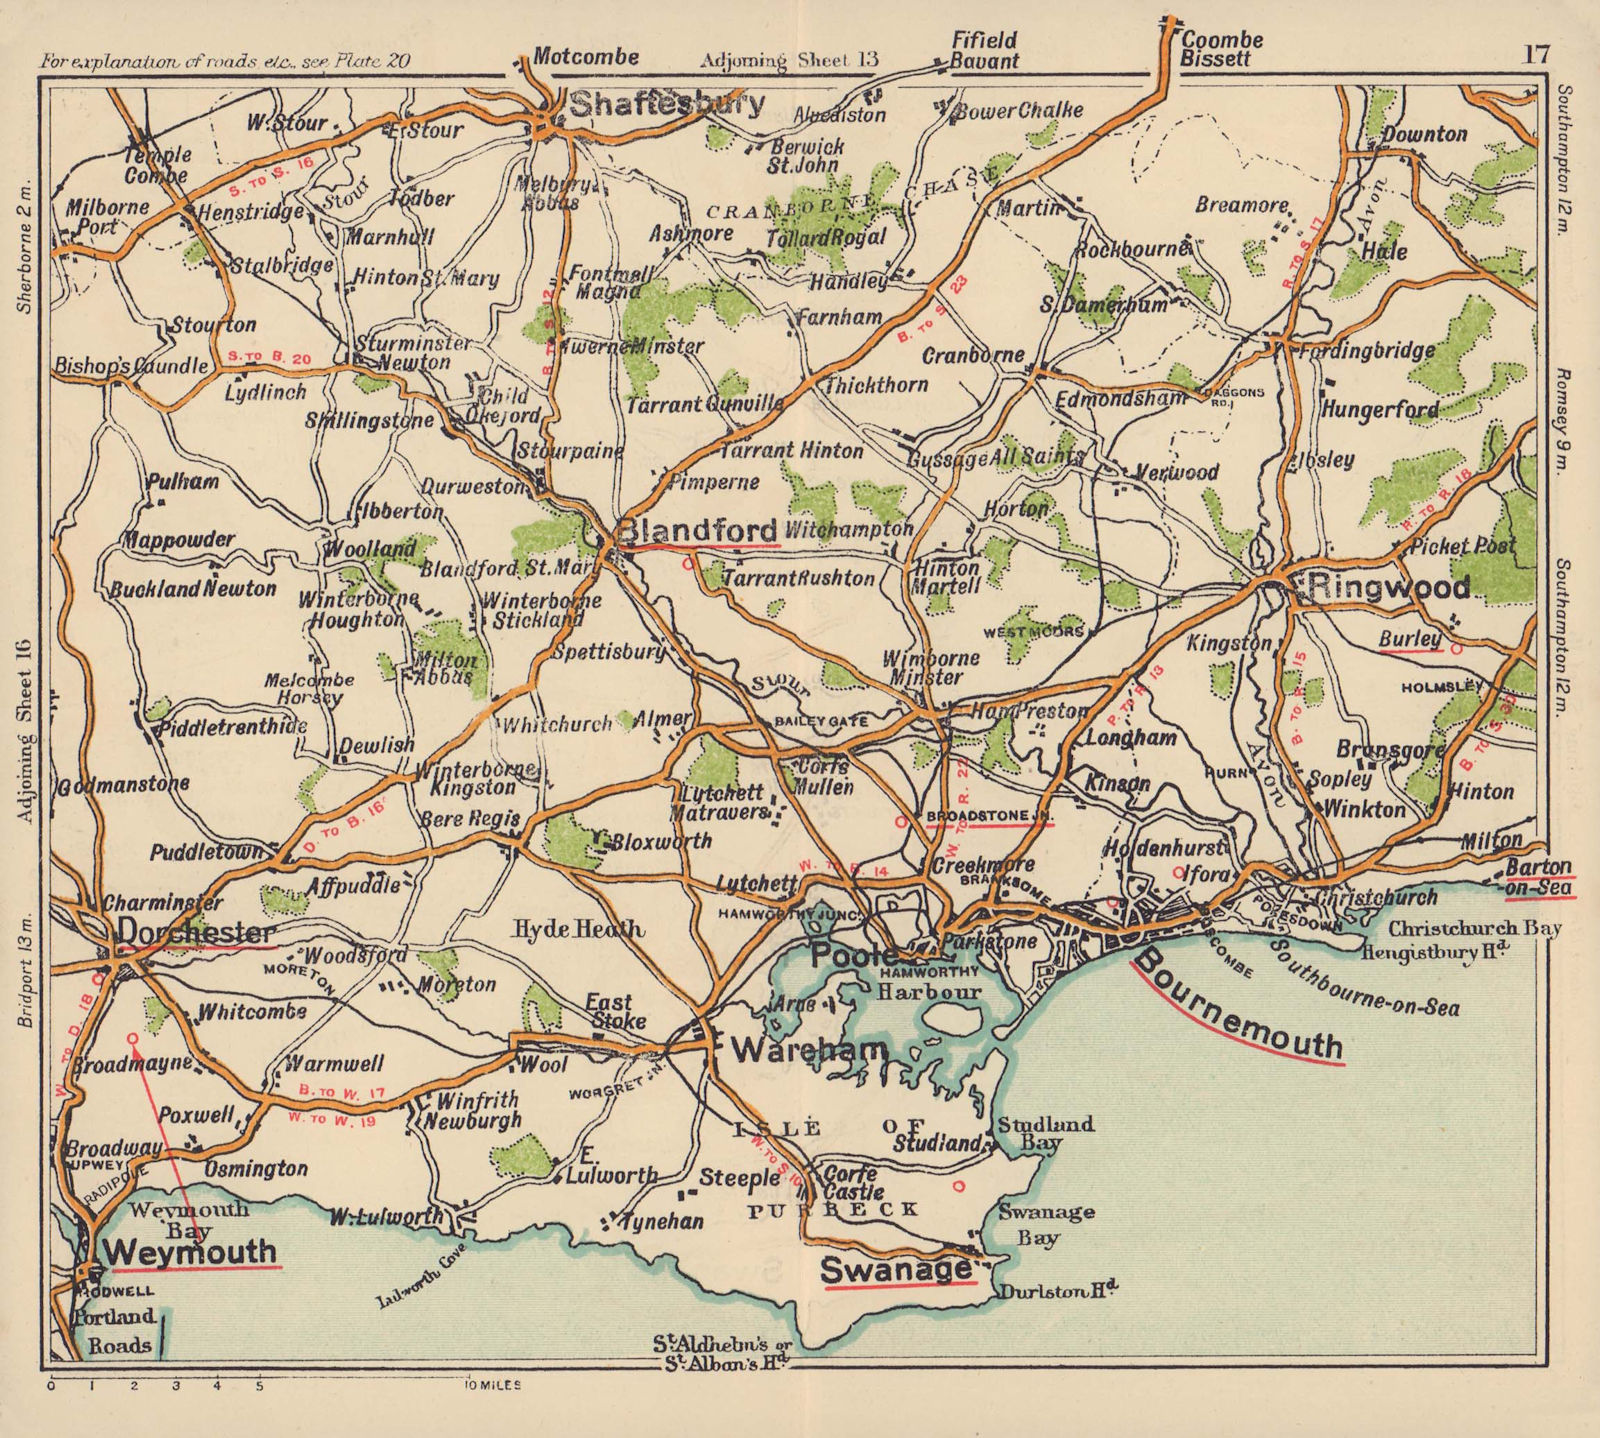 Associate Product Dorset coast road map. Poole Weymouth Bournemouth Swanage. BACON c1920 old